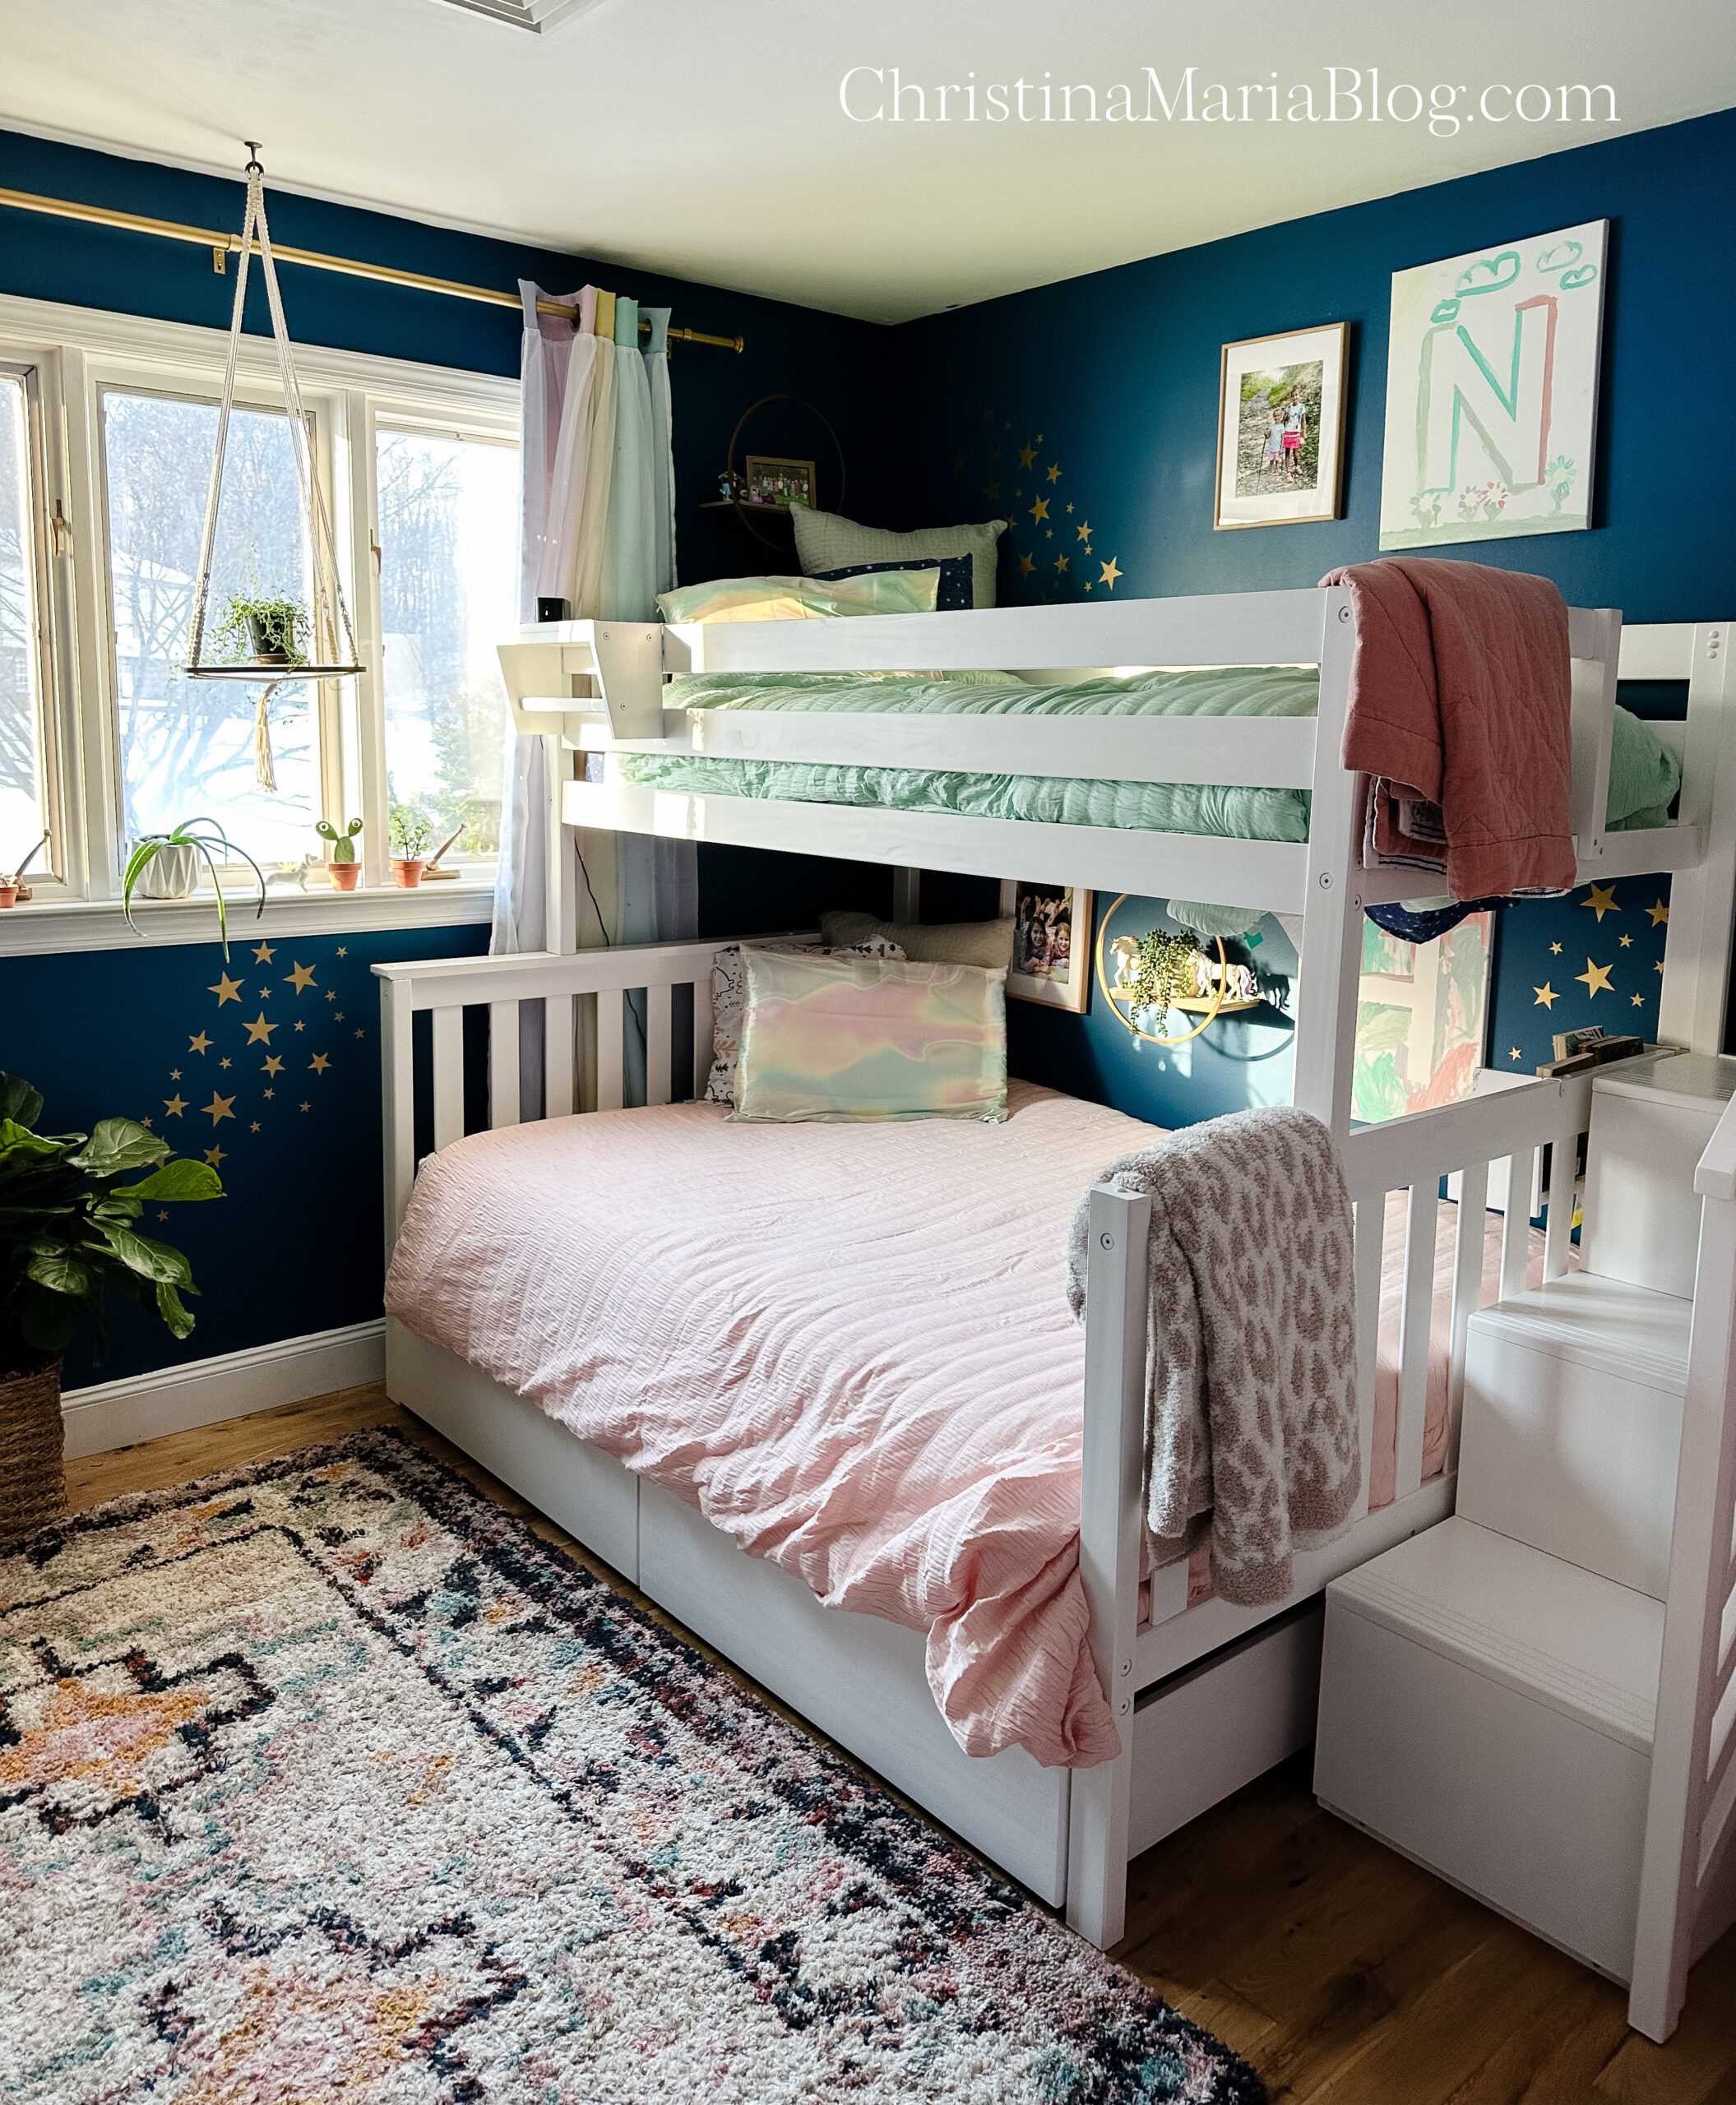 Kids bedroom with bunk beds - Christina Maria Blog